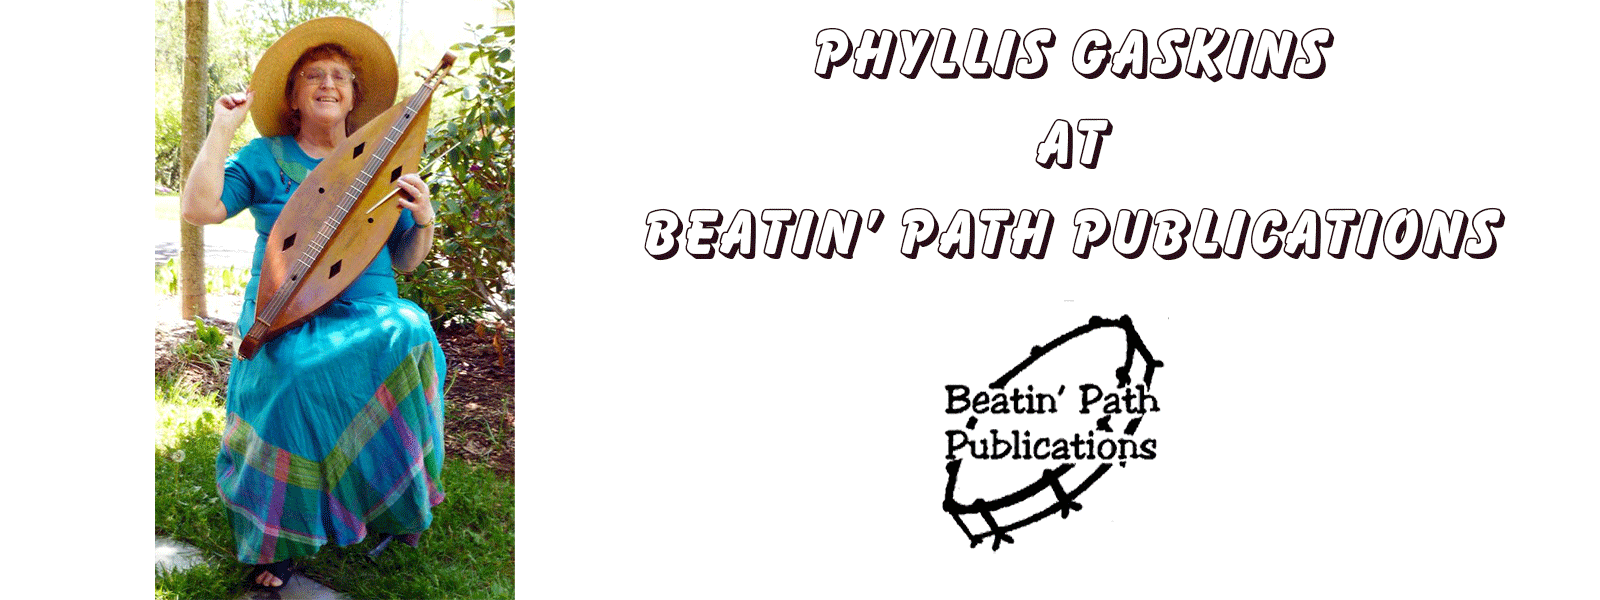 Phyllis Gaskins at Beatin' Path Publications